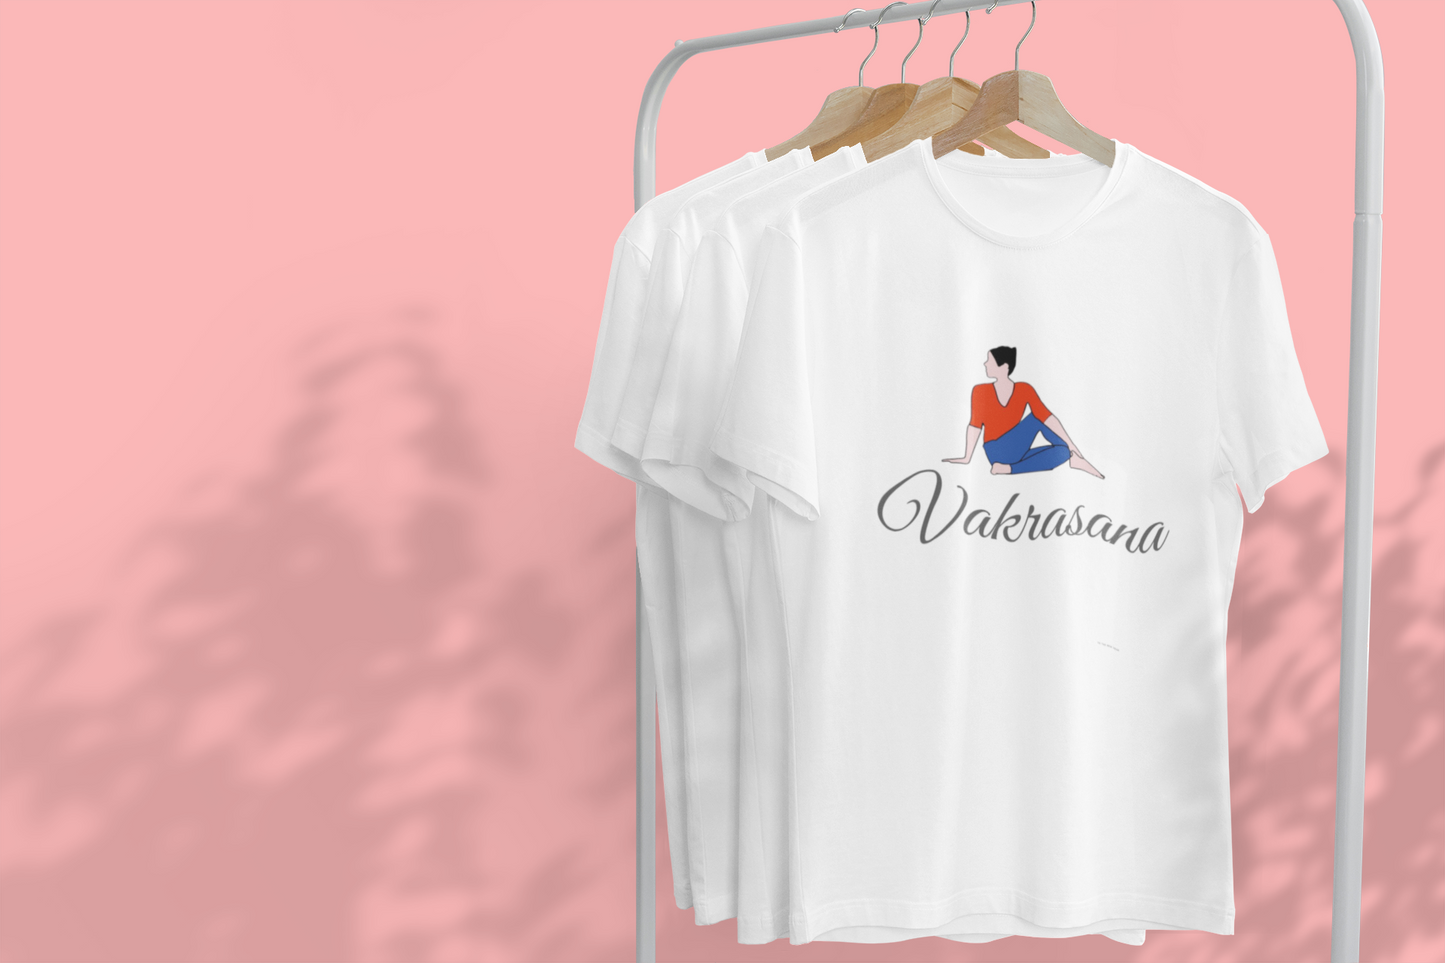 Vakrasana yoga  shirt for women